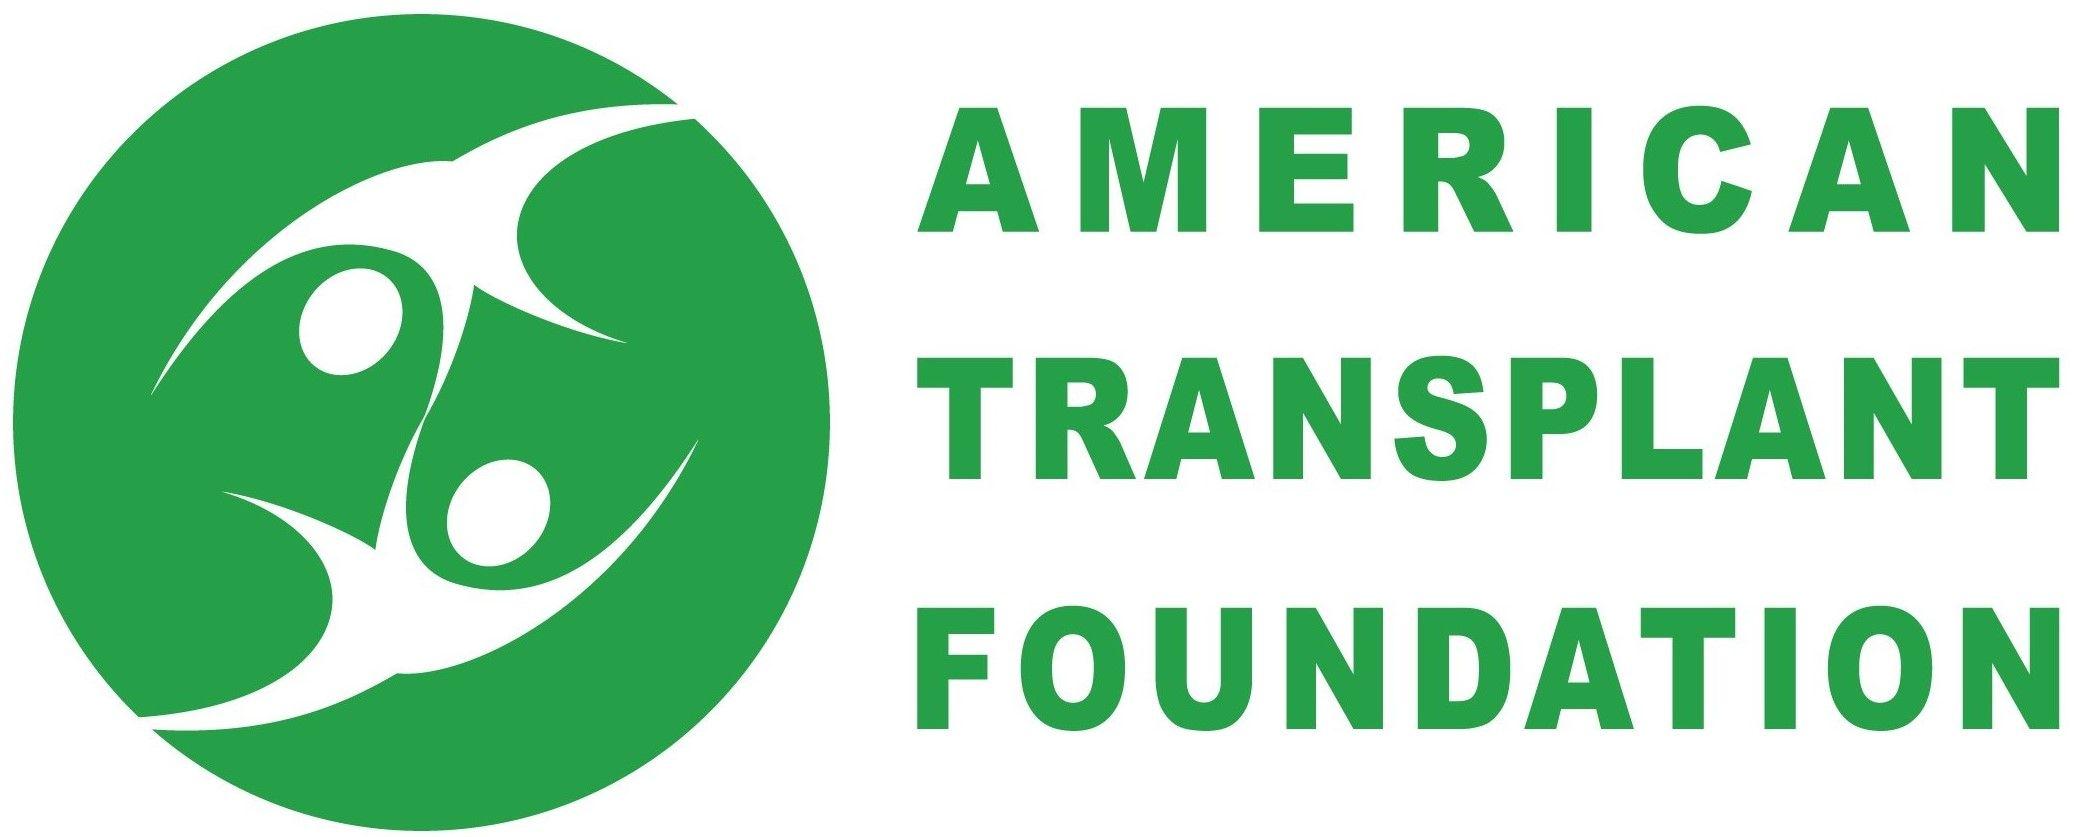 Transplant Logo - Even Superheroes Need Help Sometimes Transplant Foundation